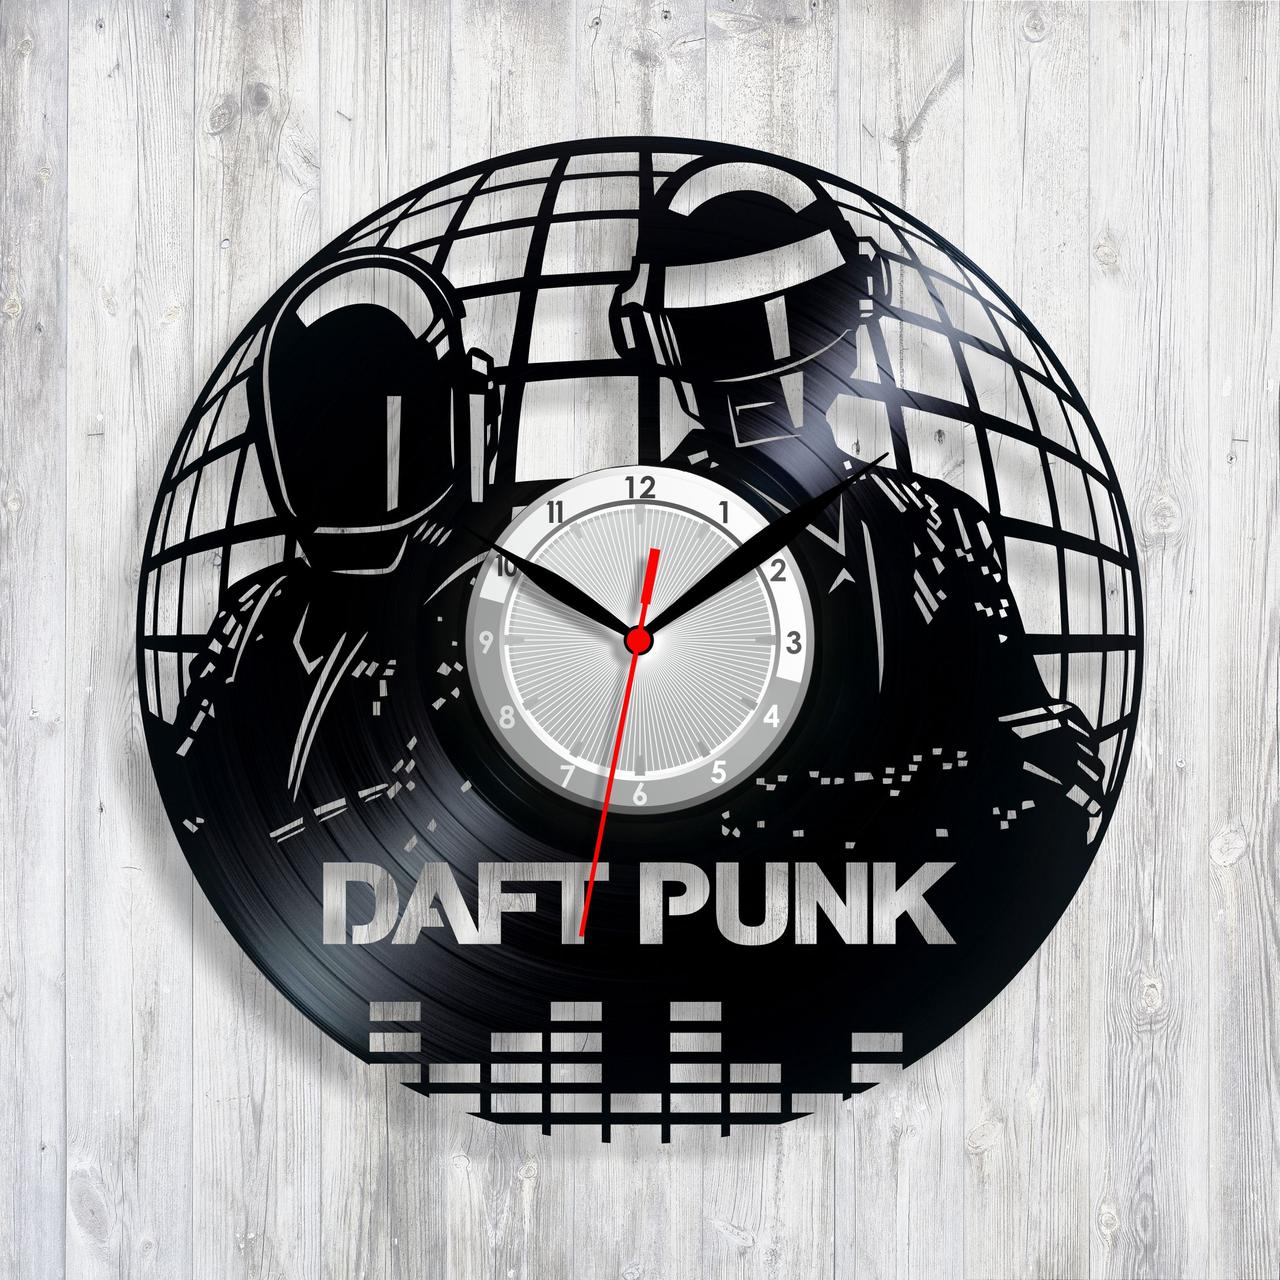 Daft Punk годинник серпанковий дует Музика годинник Концептуальний годинник Годинник в інтер'єр Дафт Панк обличчя Матеріал вініл